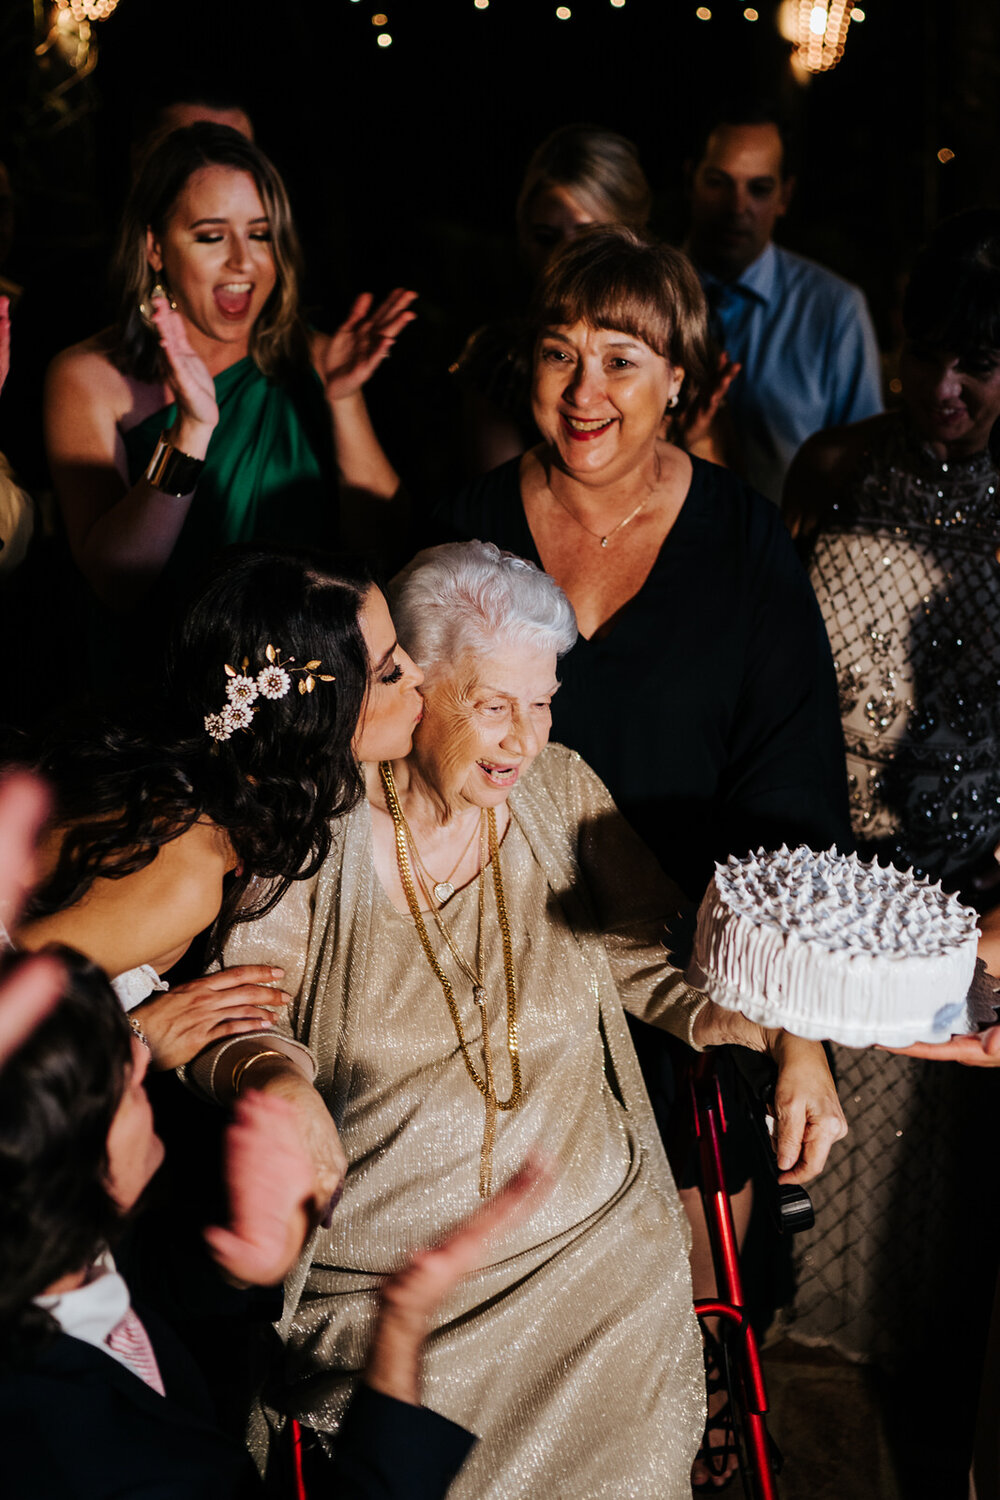 Bride kisses her grandma on the cheek as family celebrates her birthday at wedding